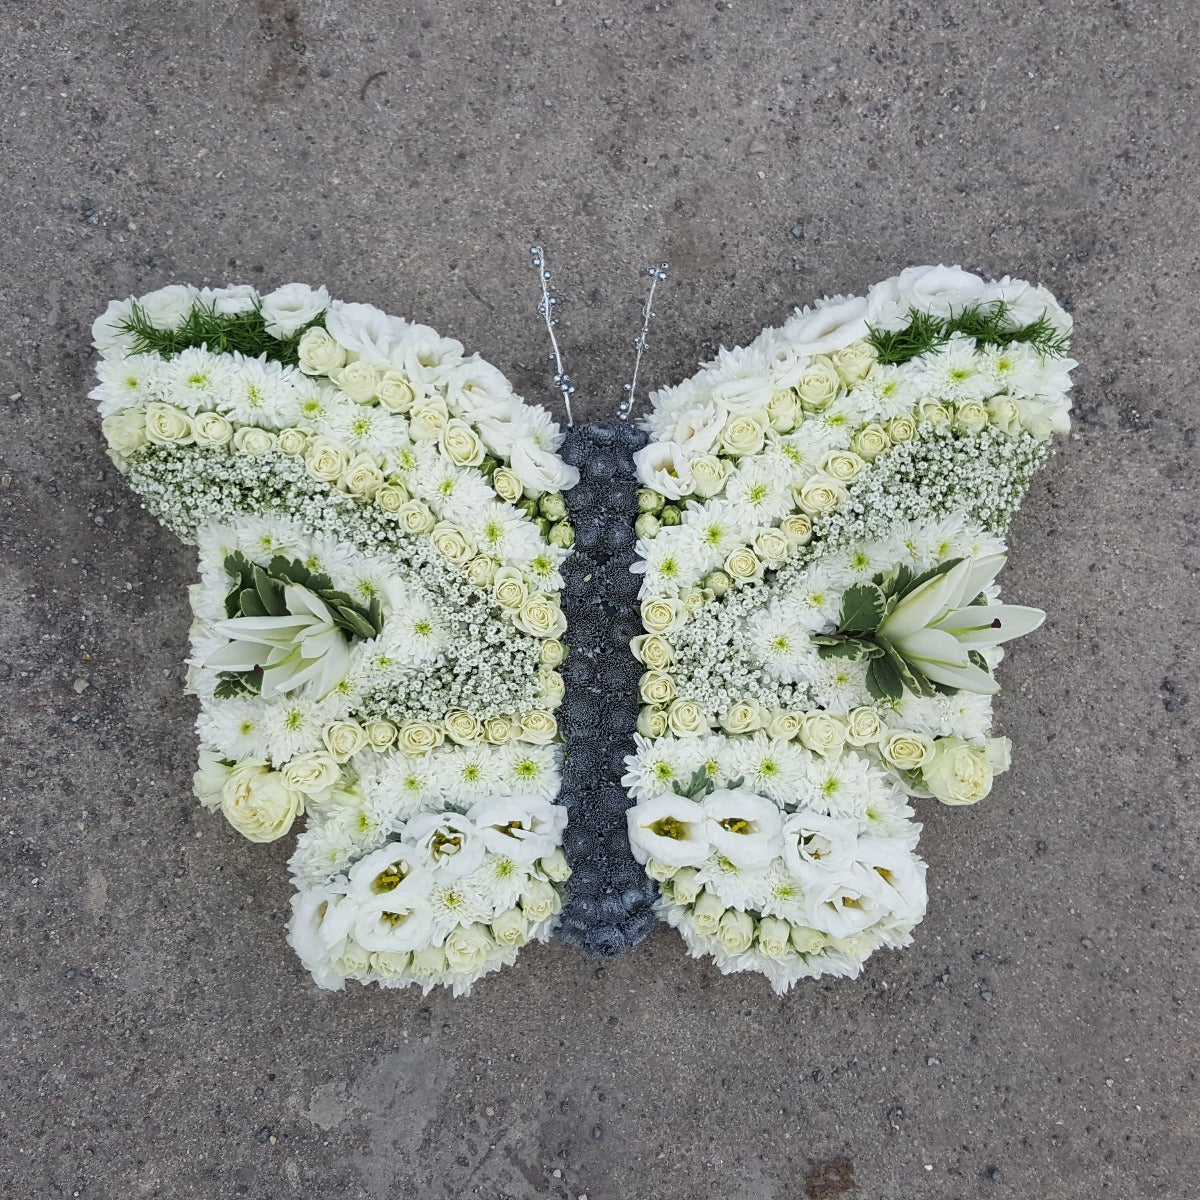 Julia's Butterfly Tribute Funeral Tribute